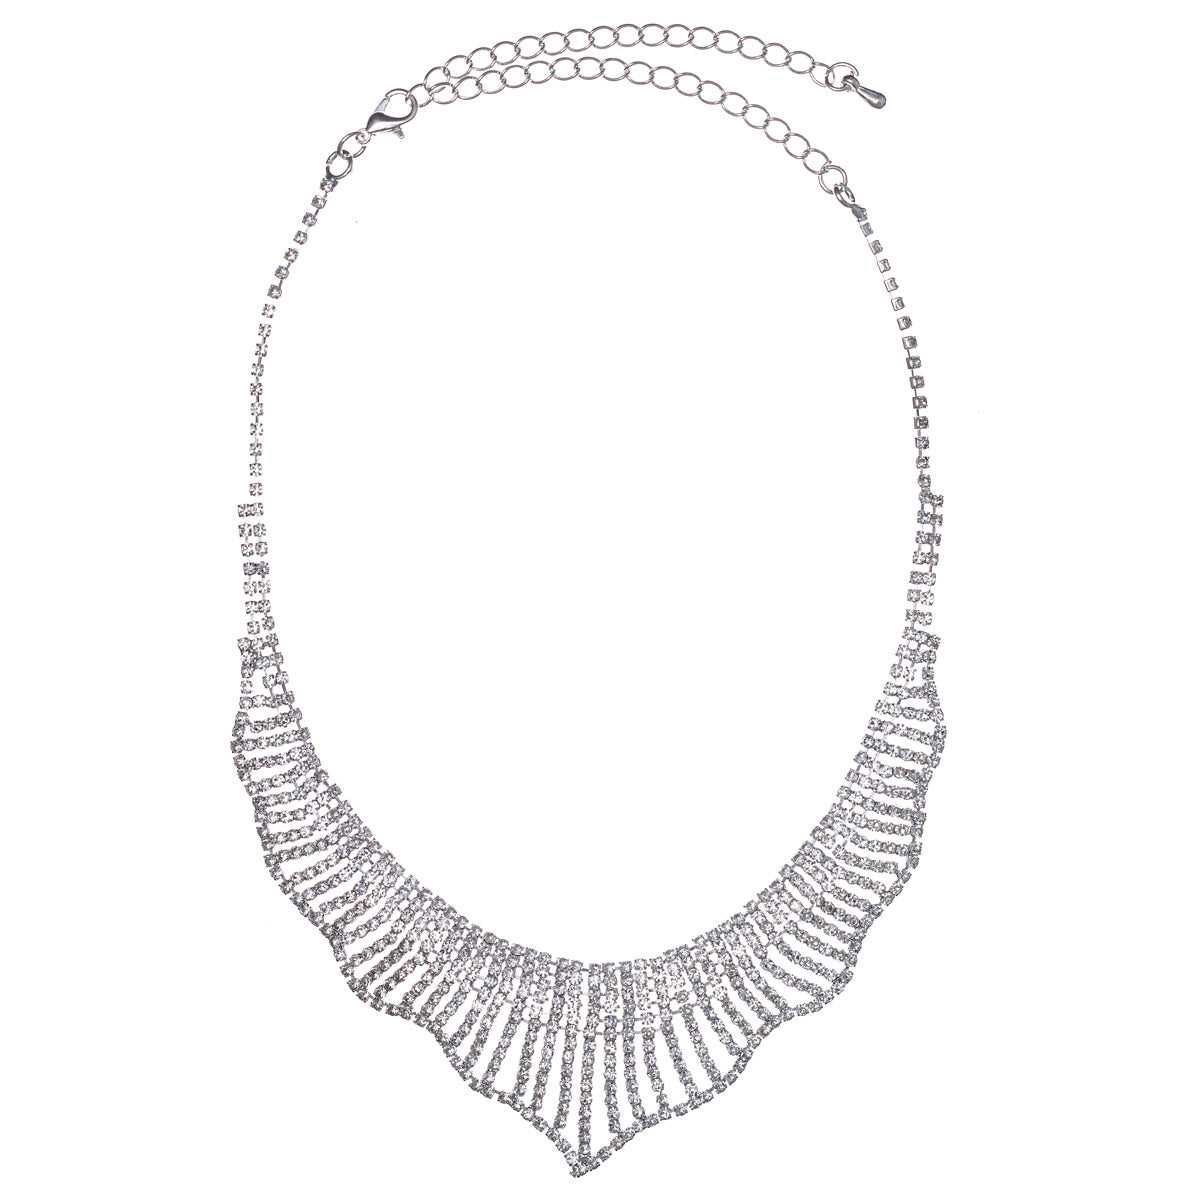 V-shaped rhinestone festive necklace + earrings